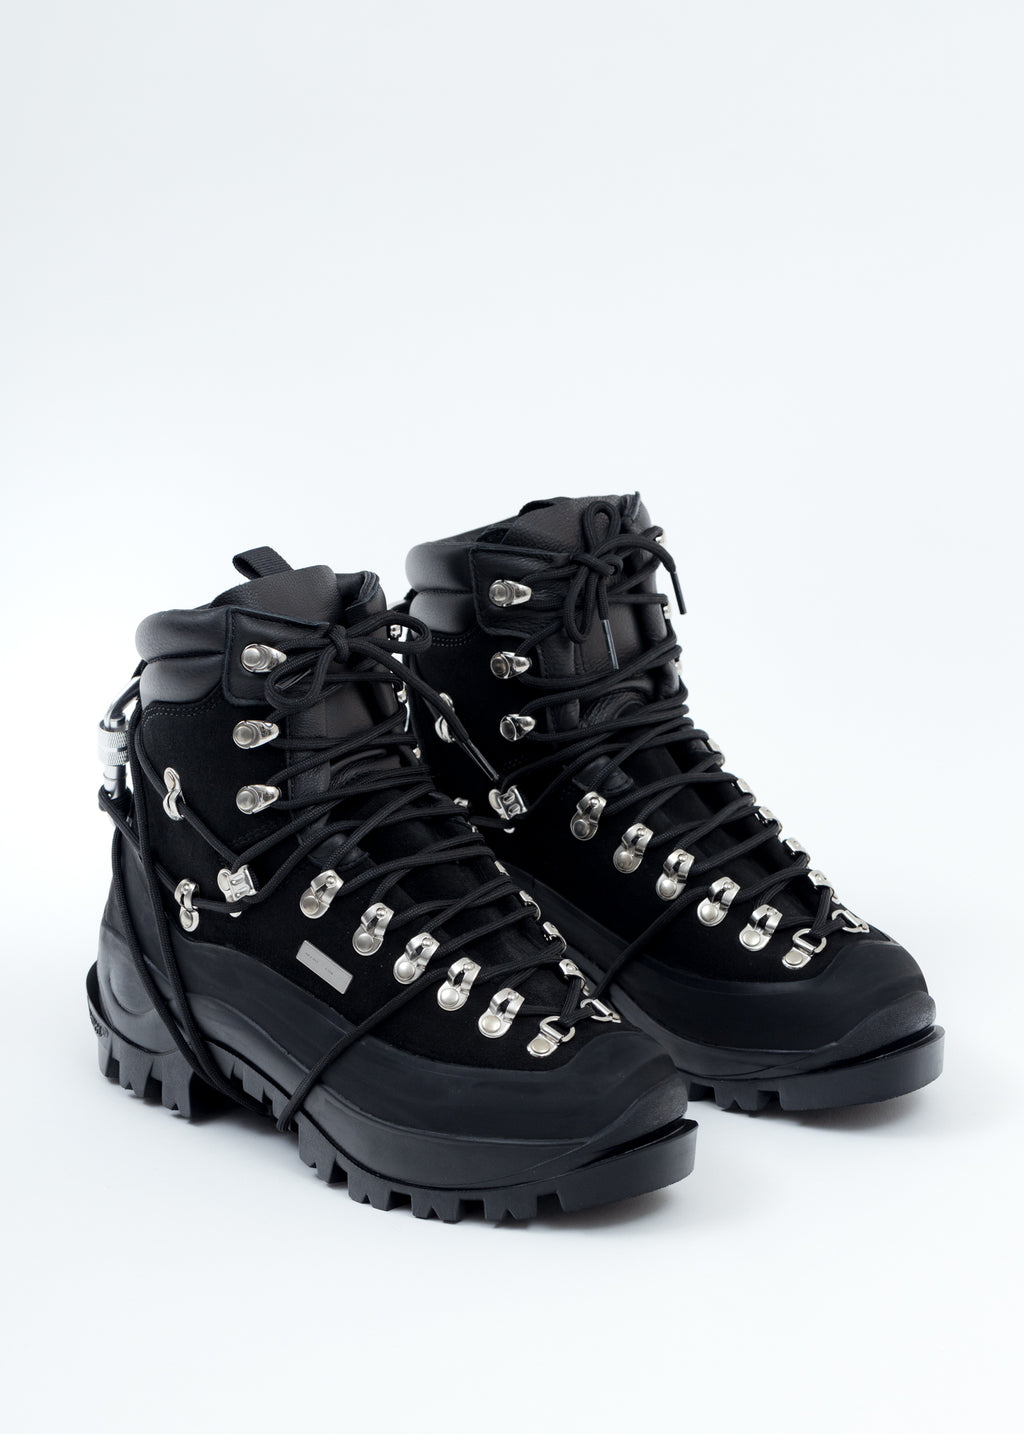 black hiking boots